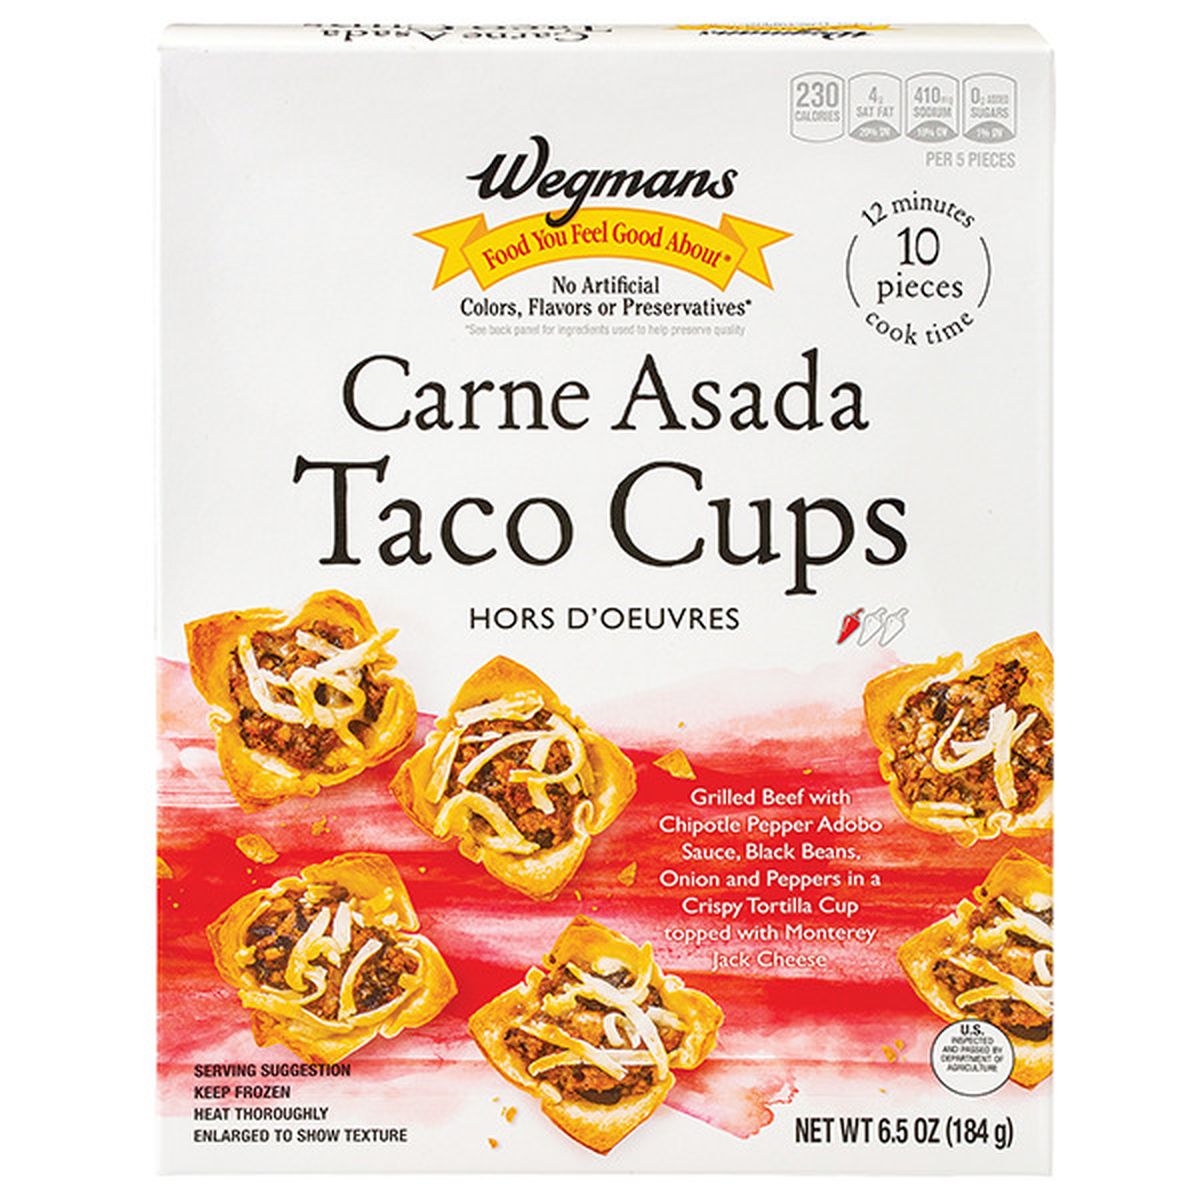 Calories in Wegmans Carne Asada Taco Cups